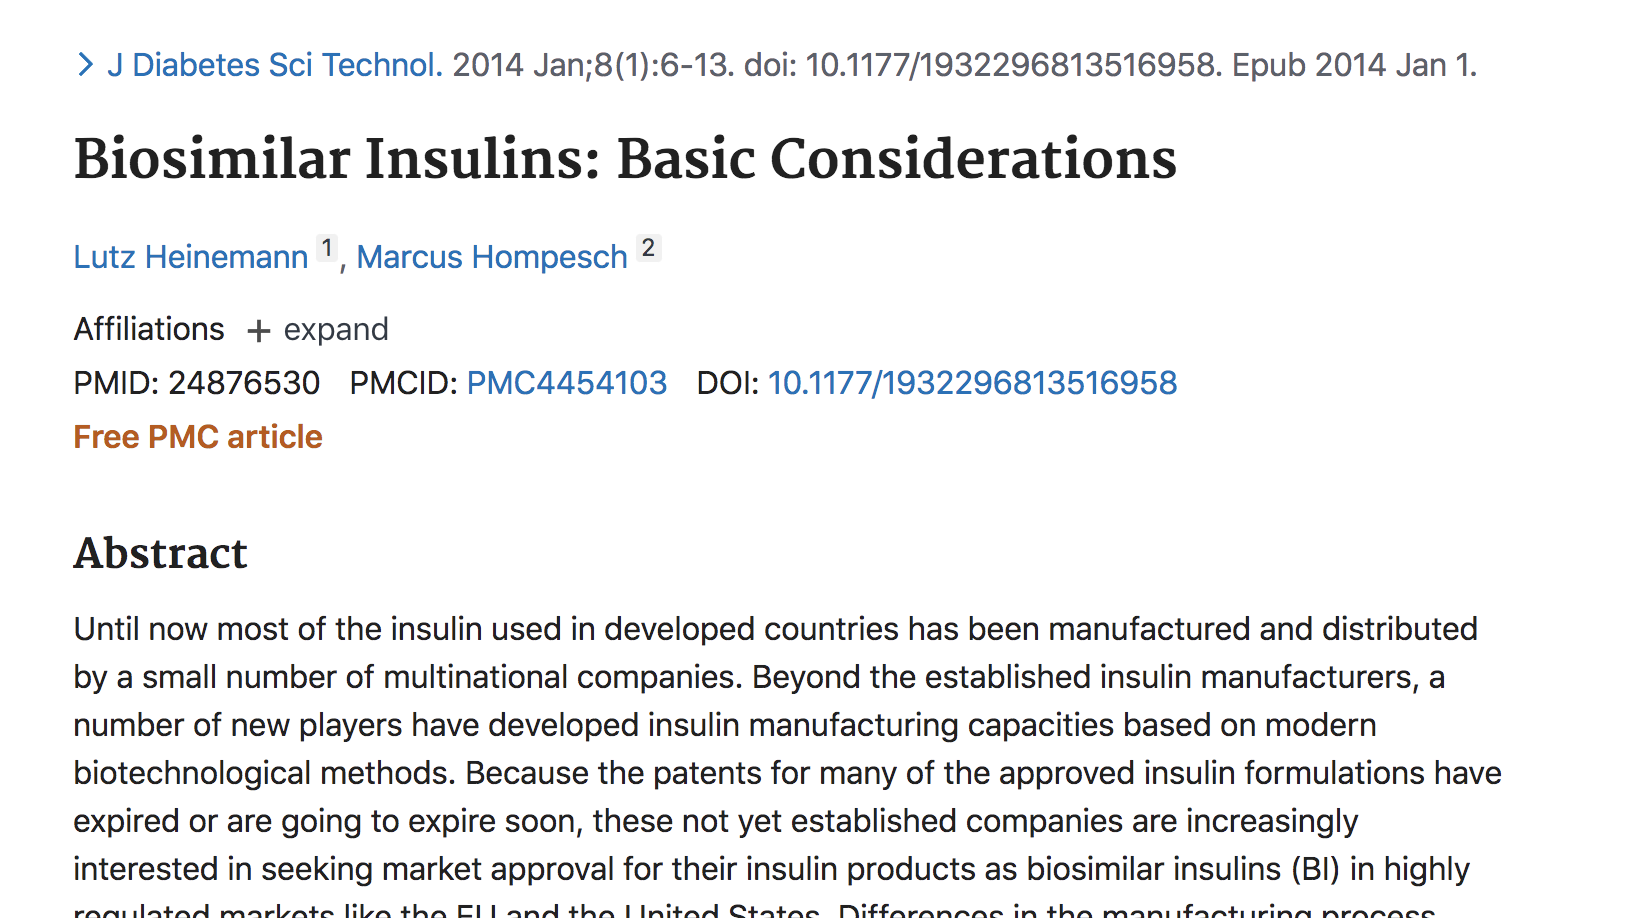 image of Biosimilar Insulins: Basic Considerations